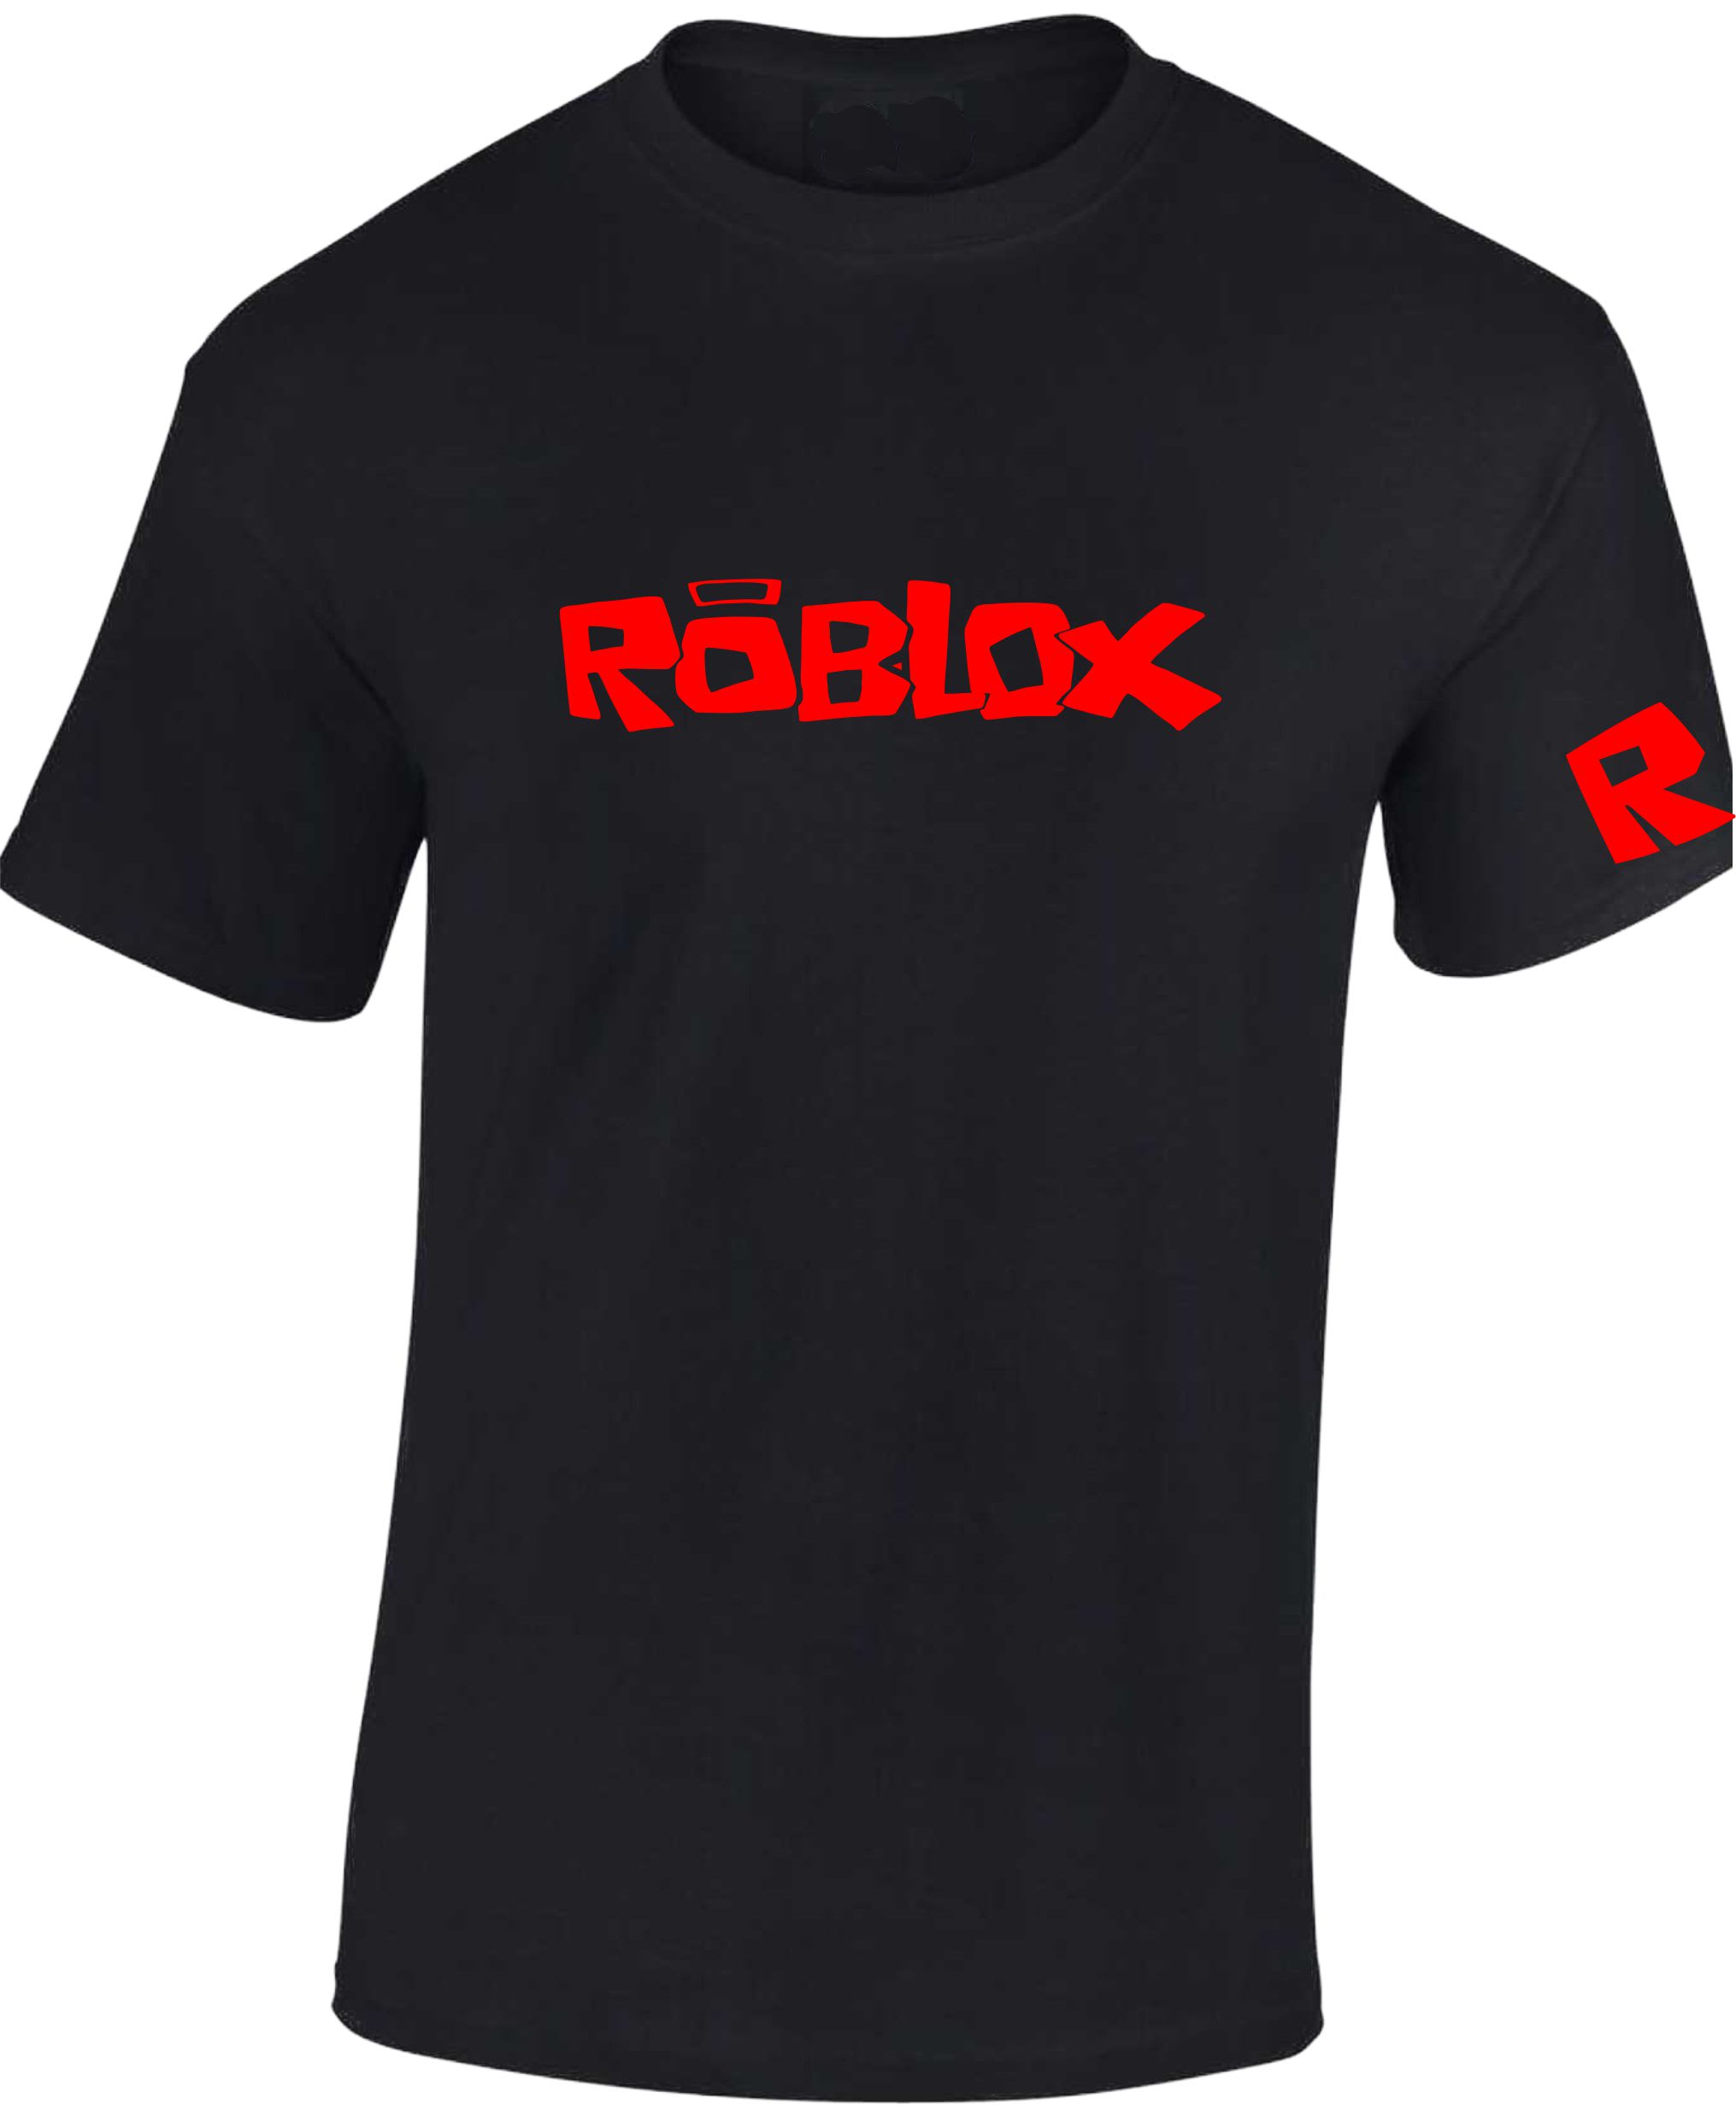 Roblox T-shirt Logo - Taurus Gaming T-shirts